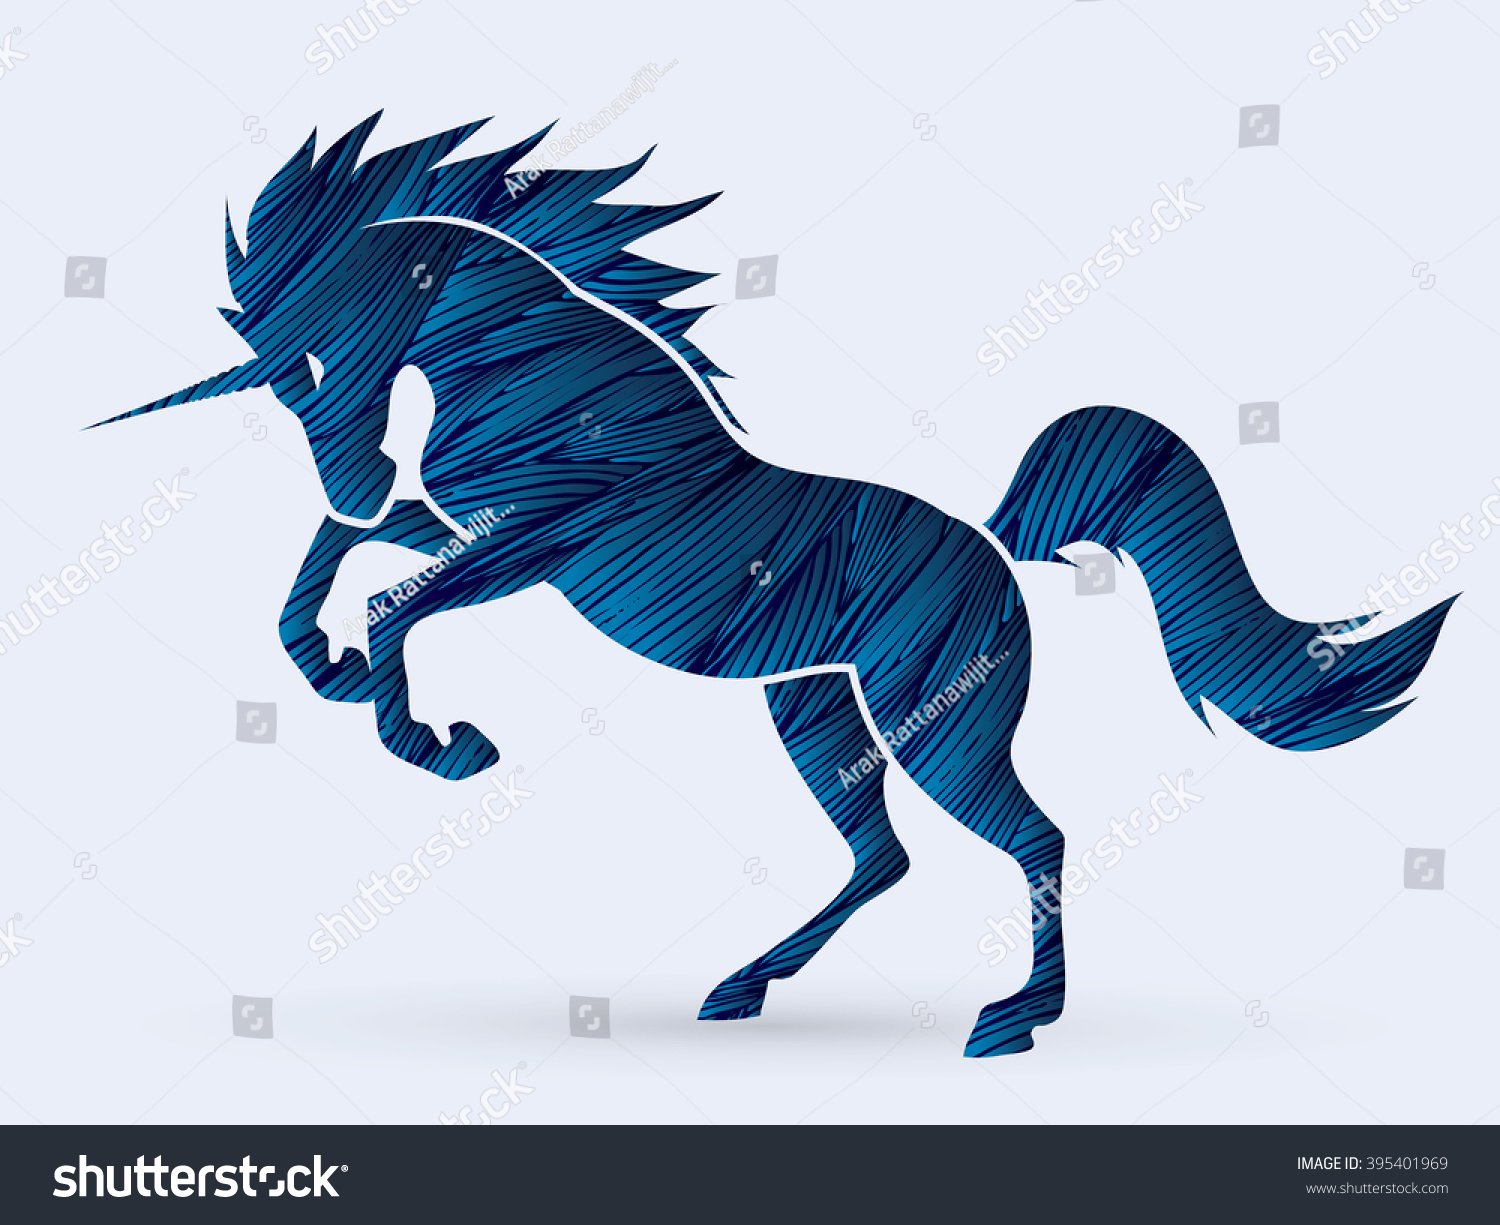 SVG of Unicorn silhouette designed using blue gunge brush graphic vector. svg